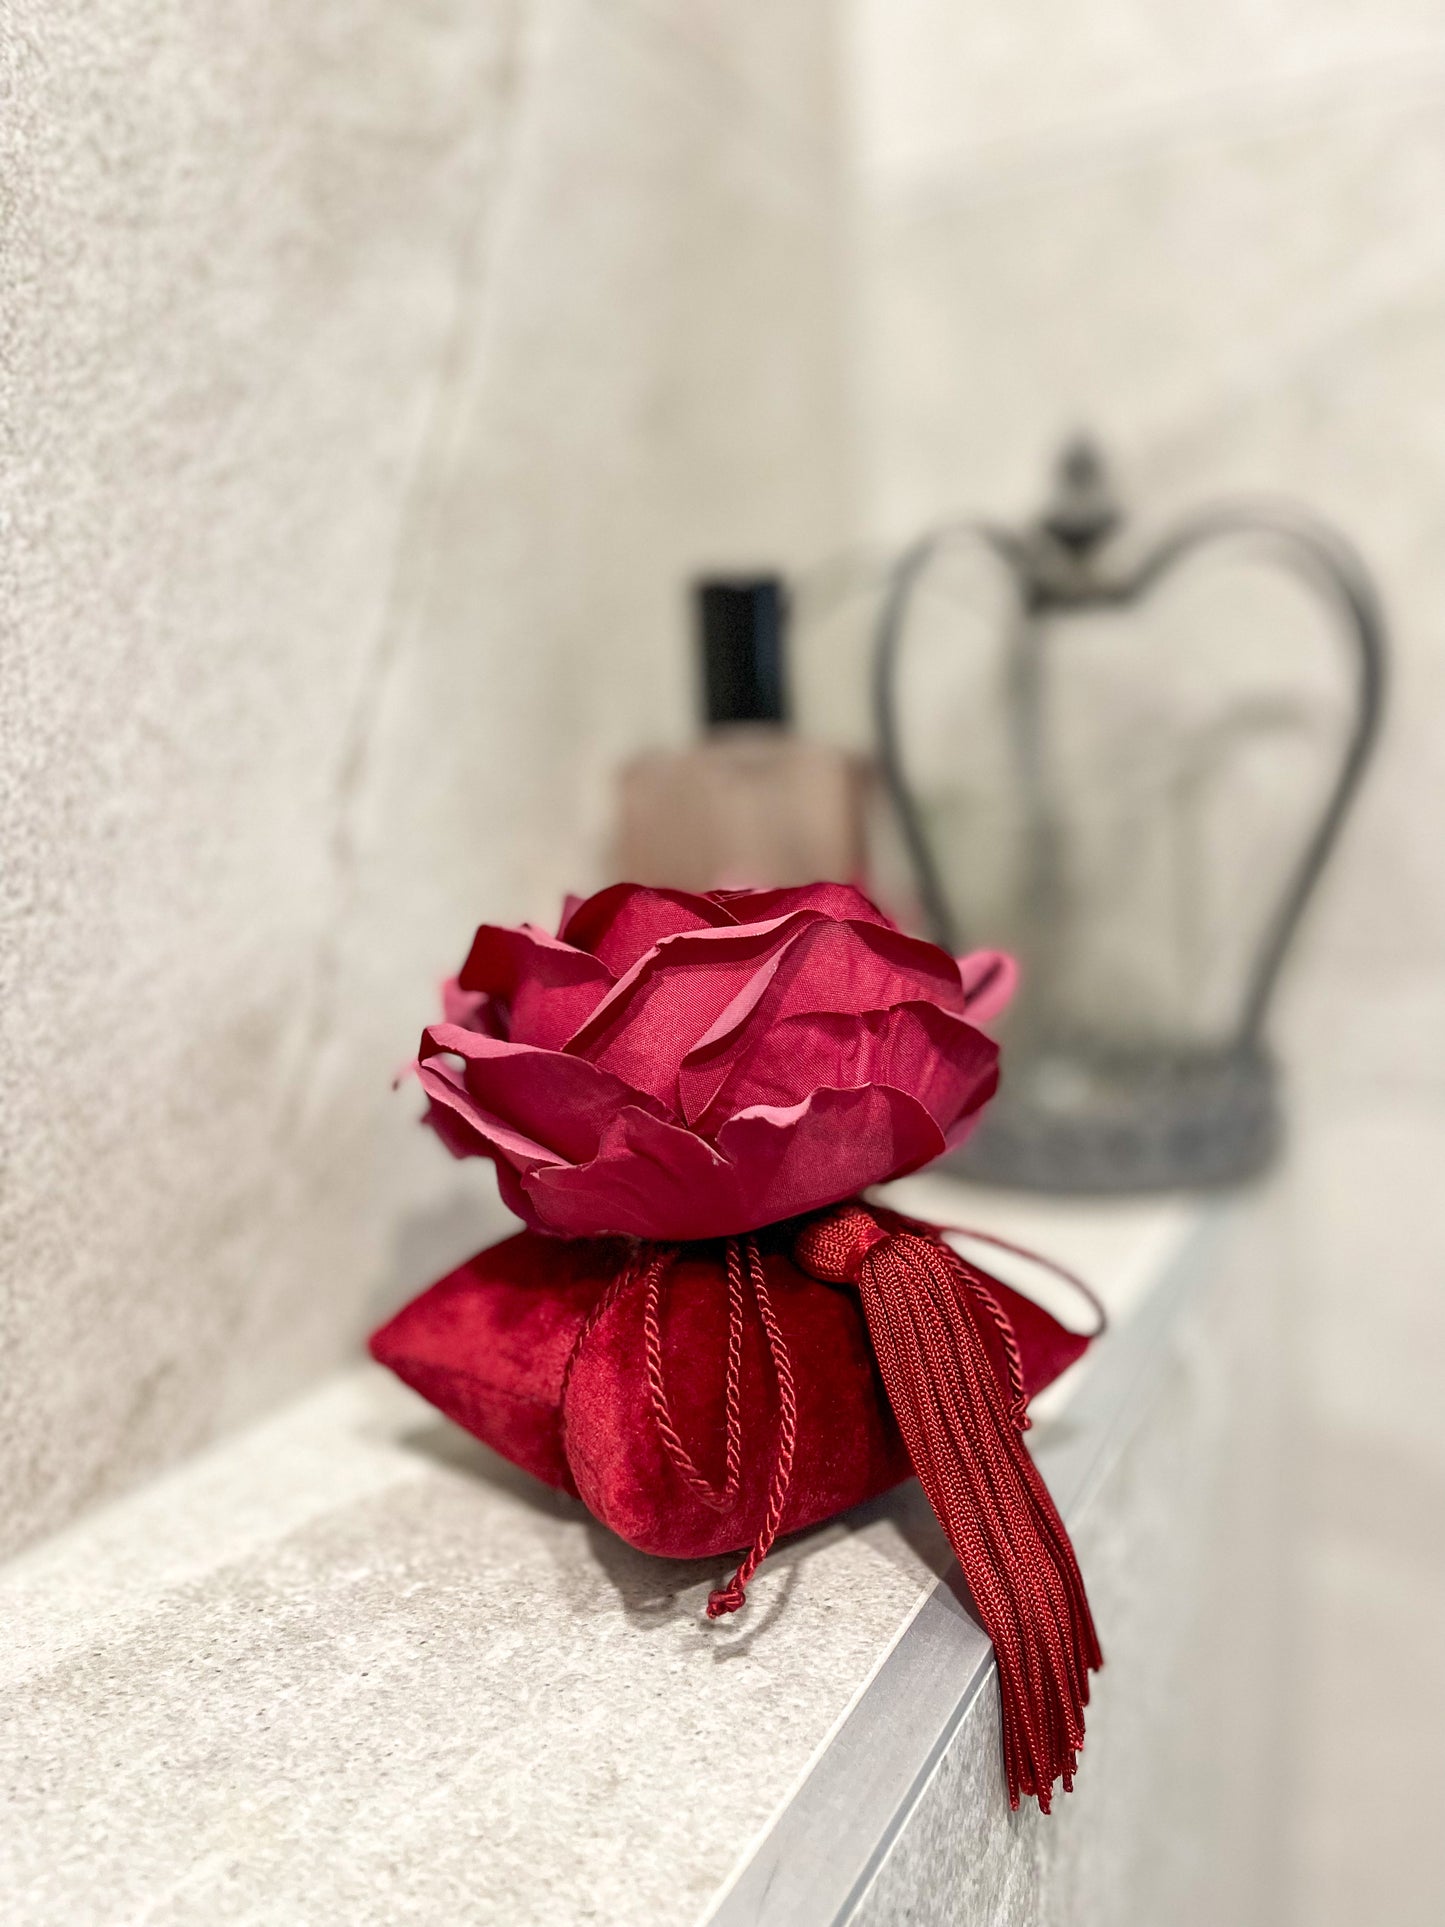 Home fragrance "Tango Rose"